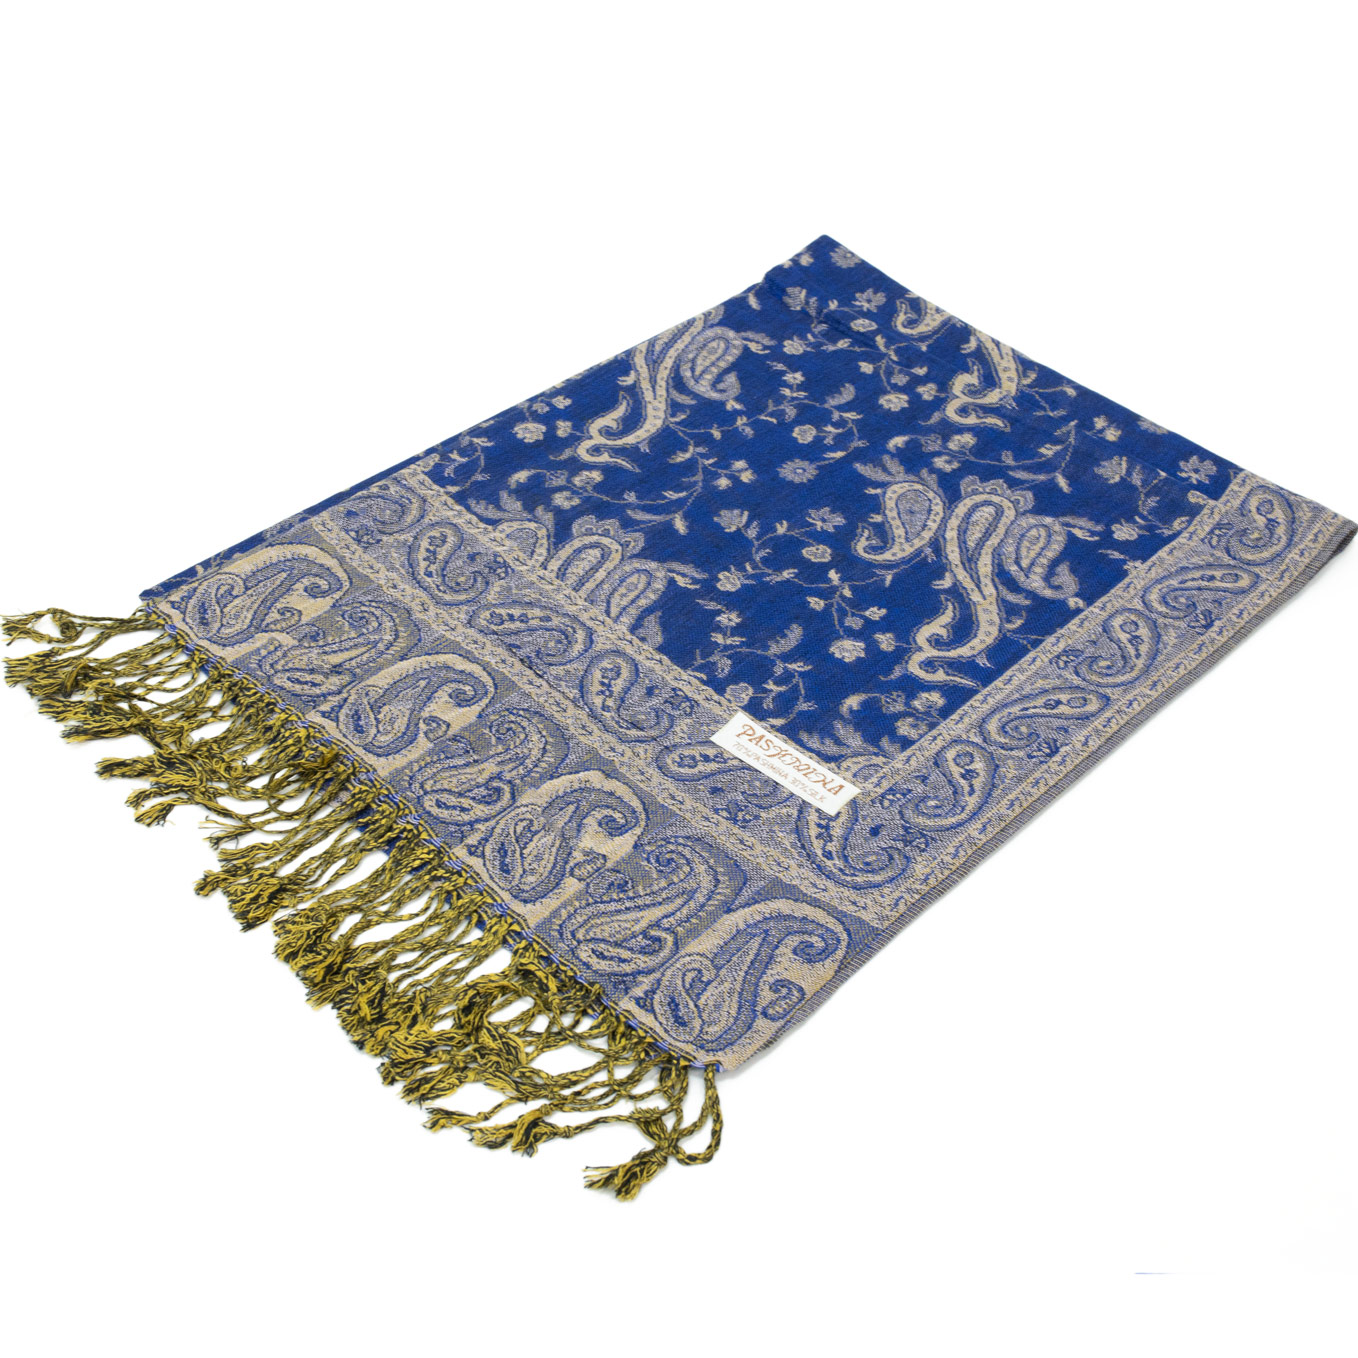 Gorgeous Paisley Pashmina 82308 Royal Blue [82308] - $4.75 : Wholesale ...